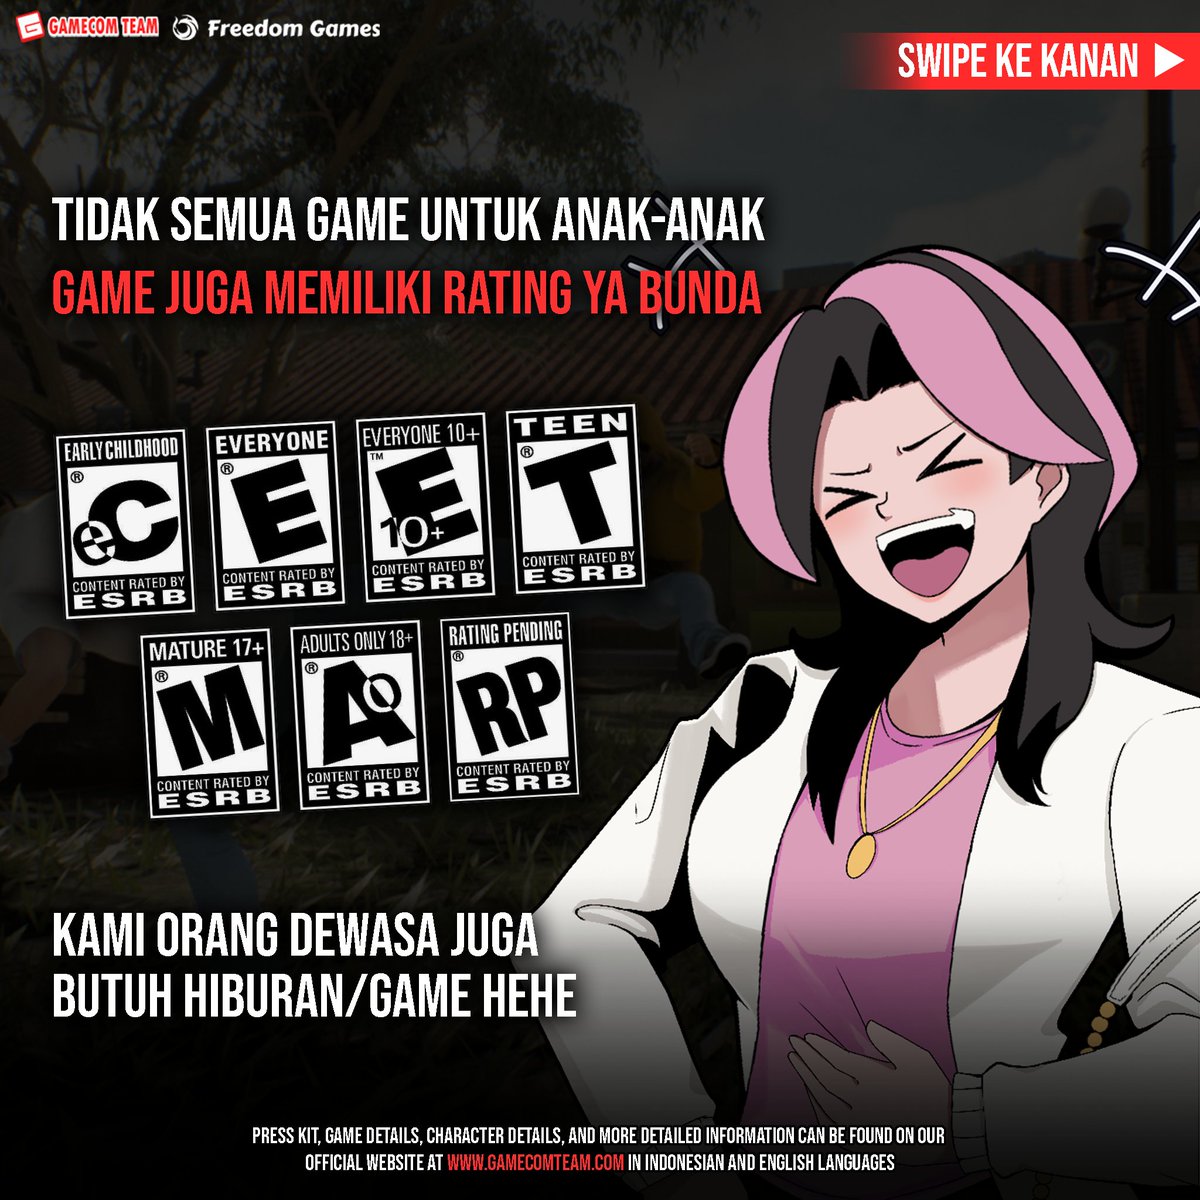 👊APA! GAME KEKERASAN MAU DI BLOKIR DI INDONESIA??? TROUBLEMAKER JUGA DONG???? EITS TENANG BUN BACA CAPTION YA UNTUK LINDUNGI ANAK-ANAK BUNDA SEKALIAN HEHE Stay Tune, Stay UwU #gamecomteam #troublemakergame #steam #IndieGameDev #indiegame #steamgame #gamedev #indiegamedev